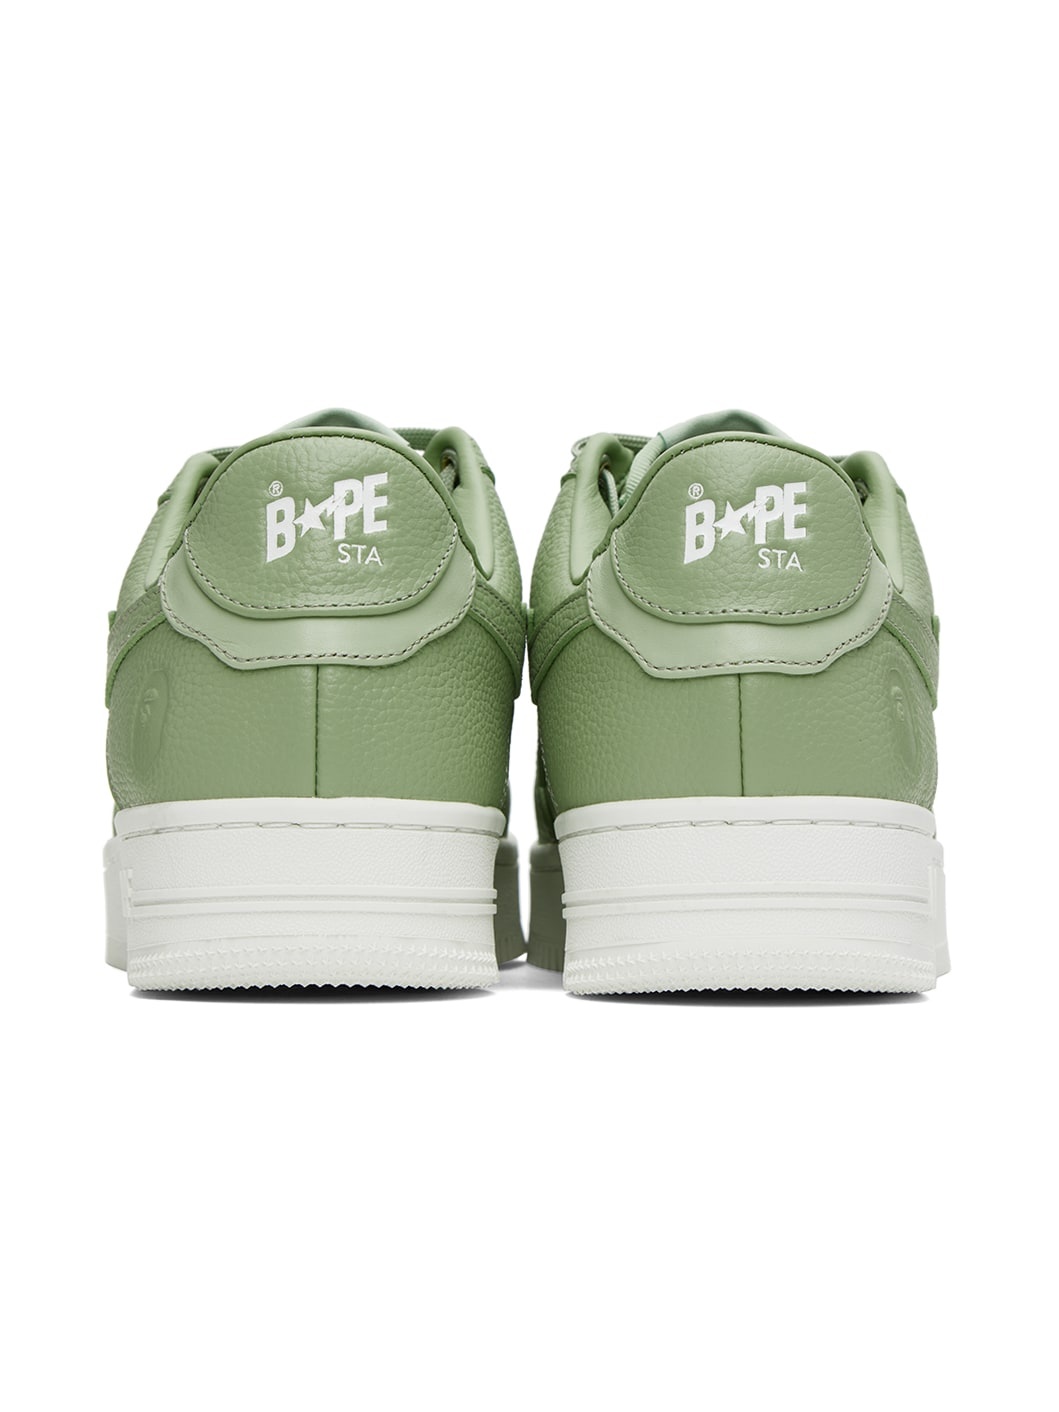 Green Sta #9 Sneakers - 2